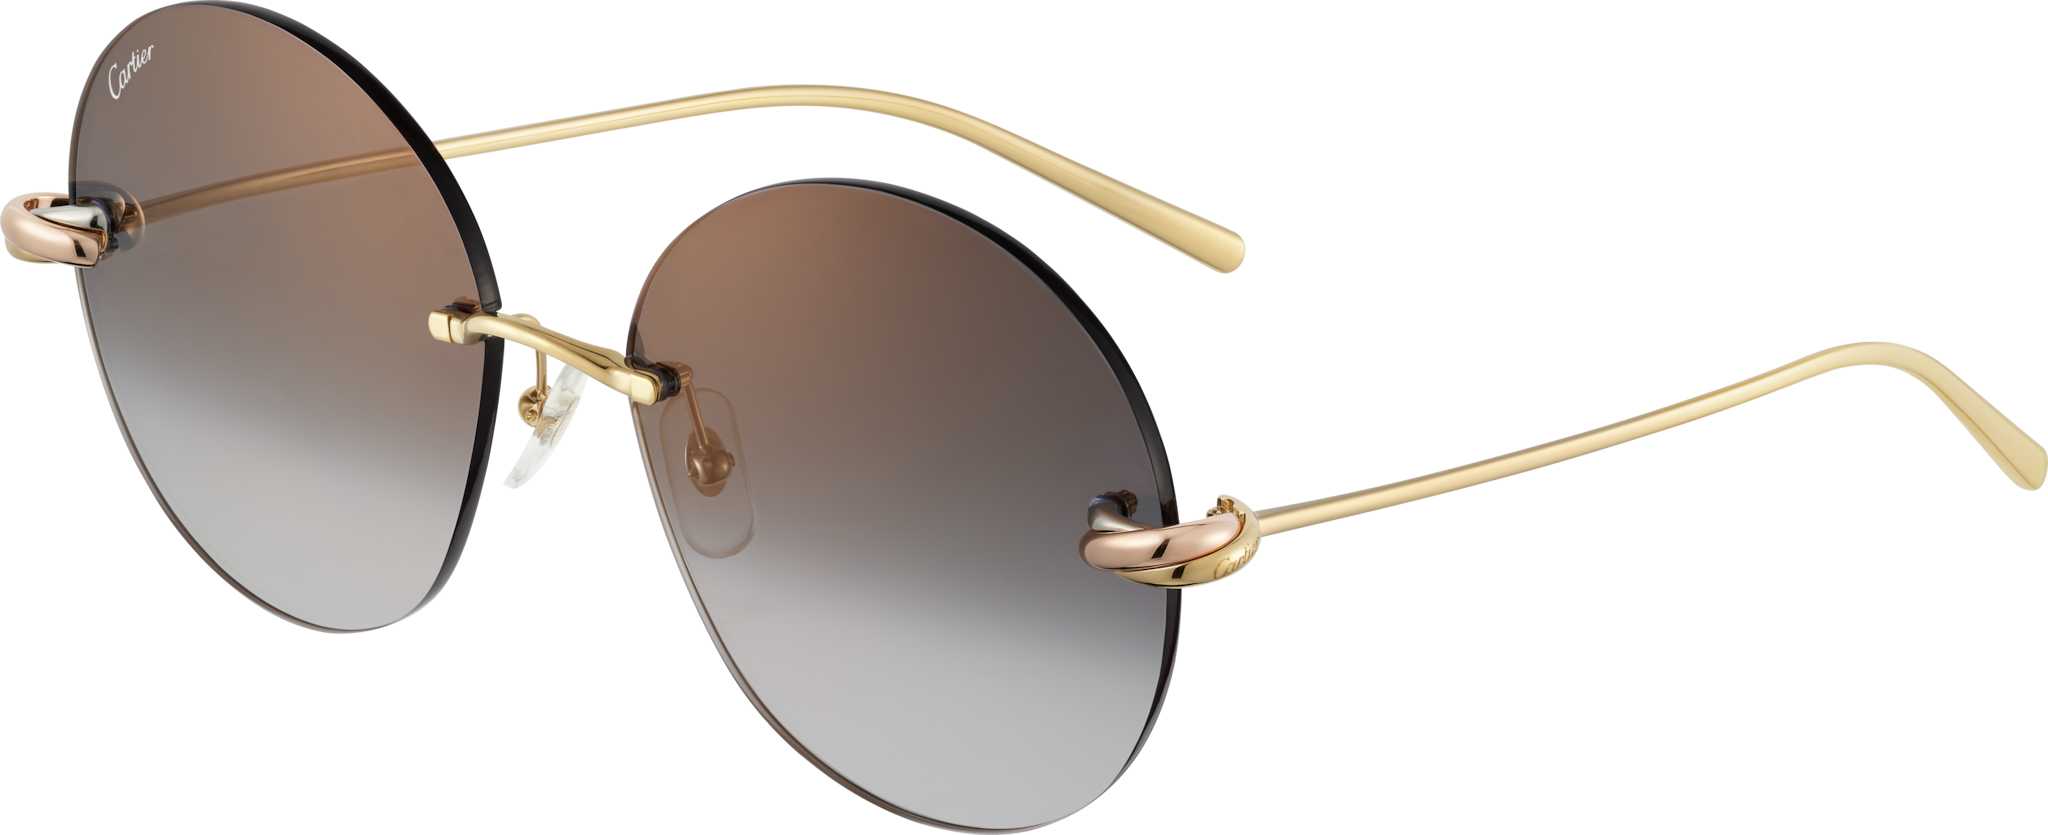 Trinity SunglassesBlack metal, smooth three-tone golden finish, grey lenses